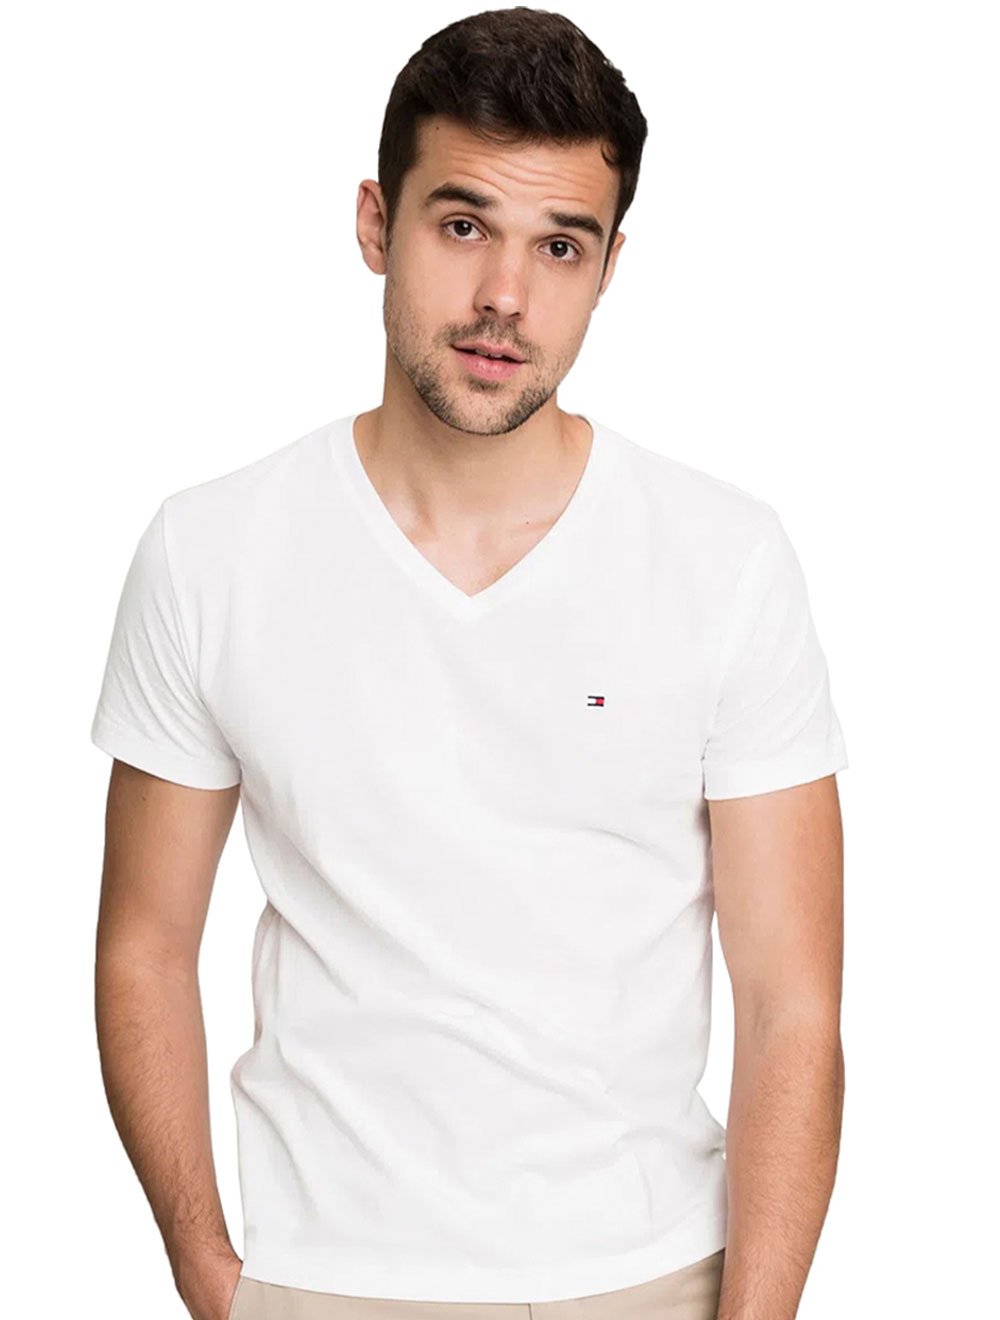 Camiseta Tommy Hilfiger Masculina Essential V-Neck Branca